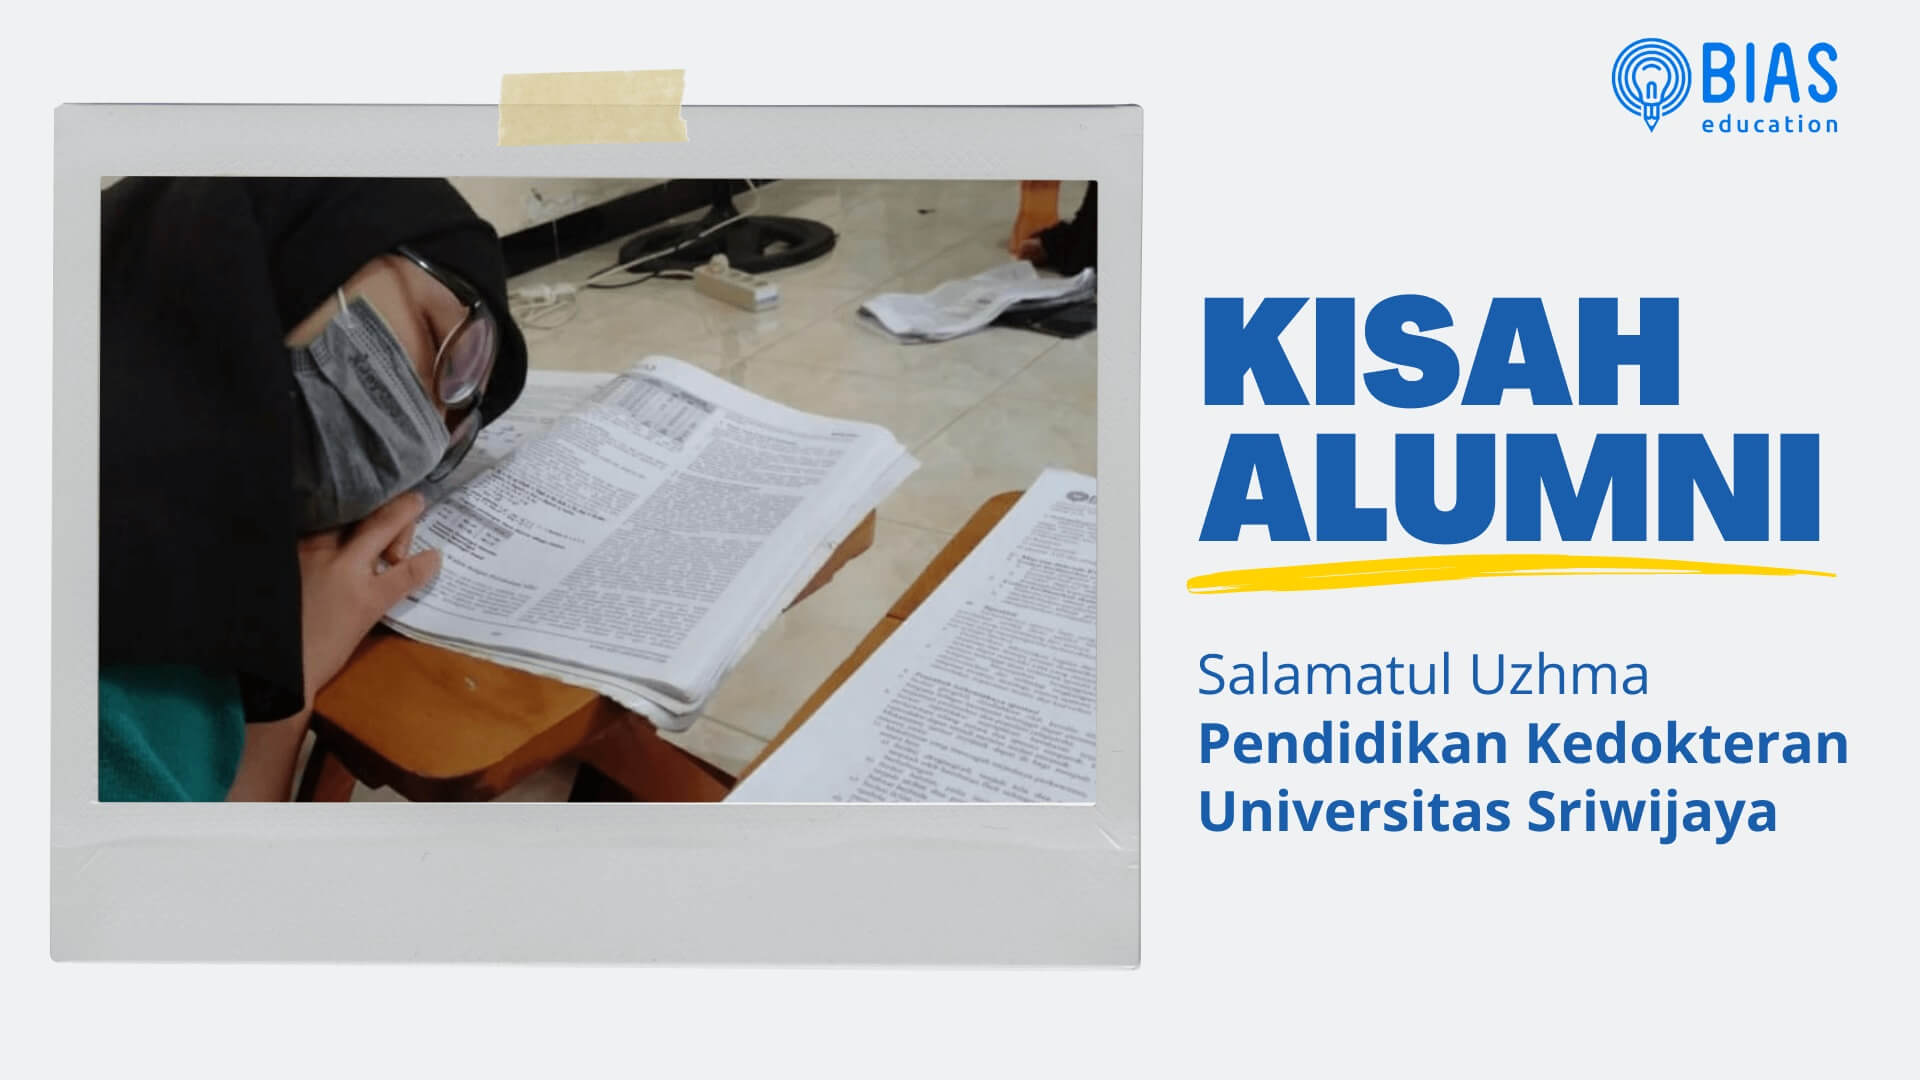 Kisah Alumni - Salamatul Uzhma